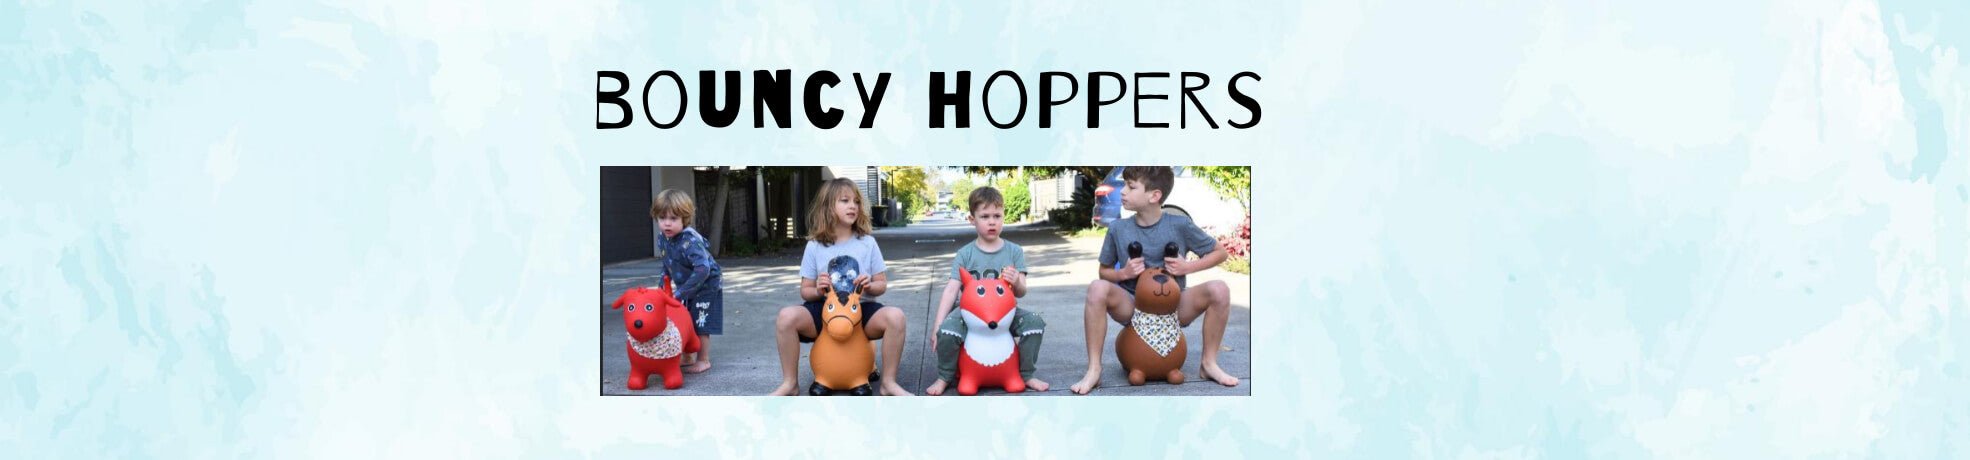 Bouncy Hoppers - Kids Mega Mart